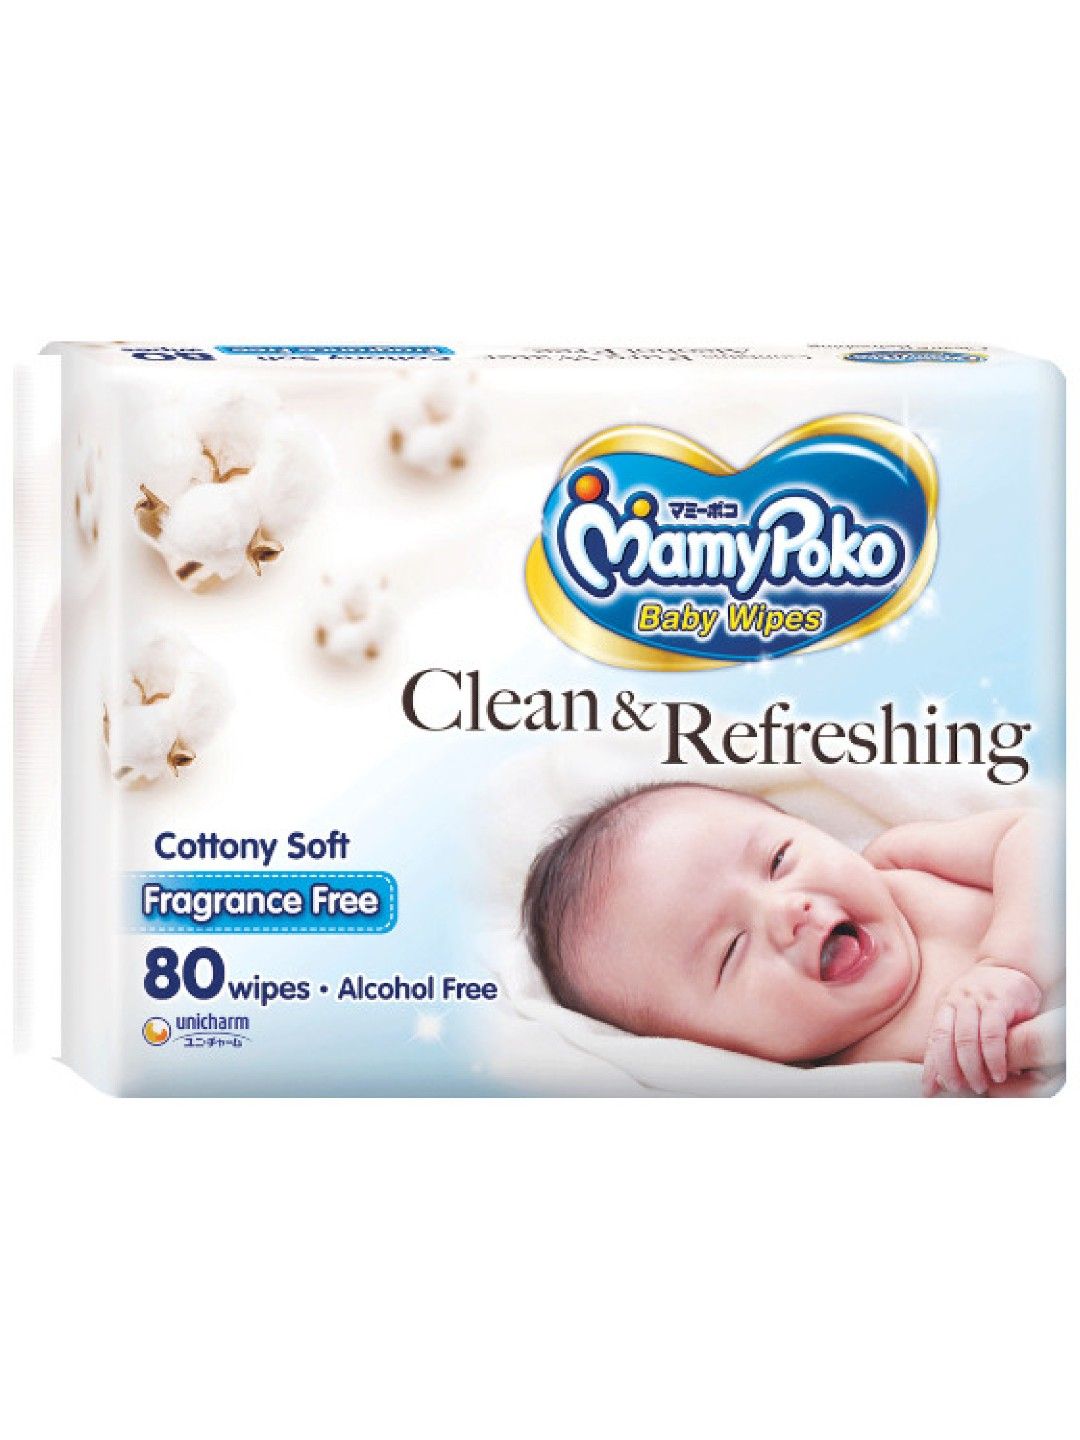 MamyPoko Baby Wipes Fragrance Free (80 pulls)